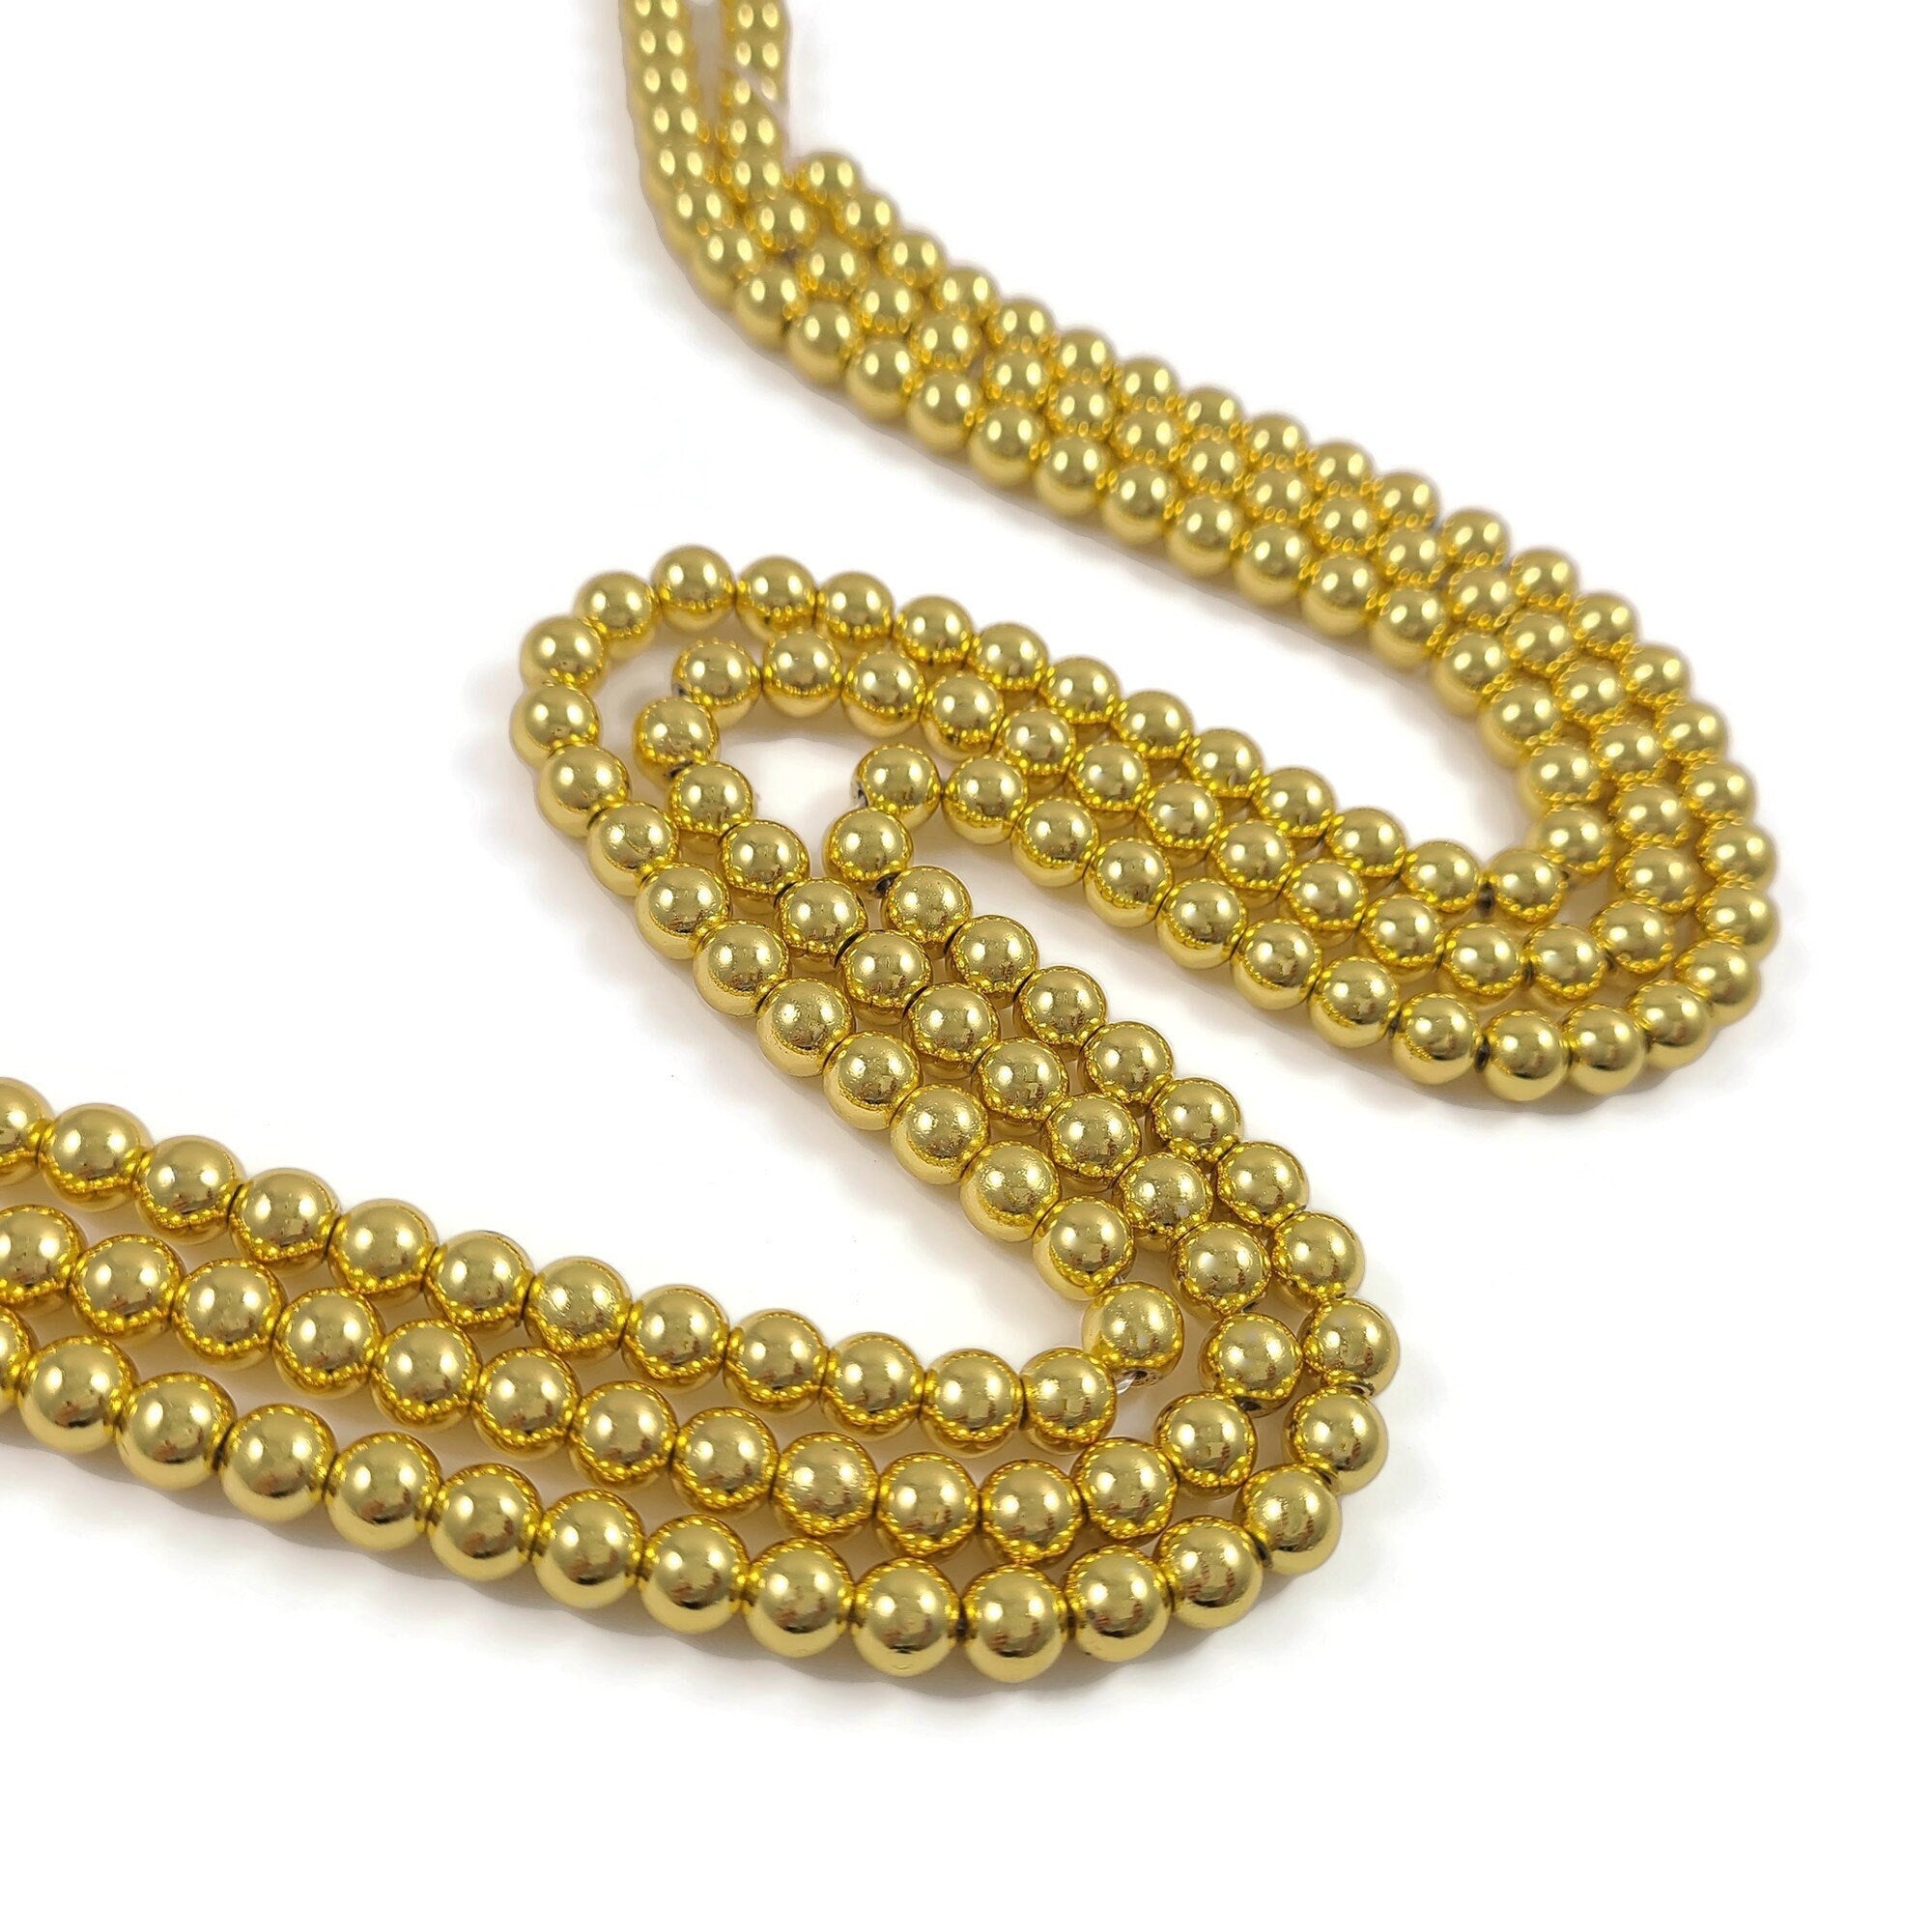 Gold hematite beads, Grade AAA, Long-lasting plated, 4mm, 6mm, Round gemstone beads, Jewelry making supplies